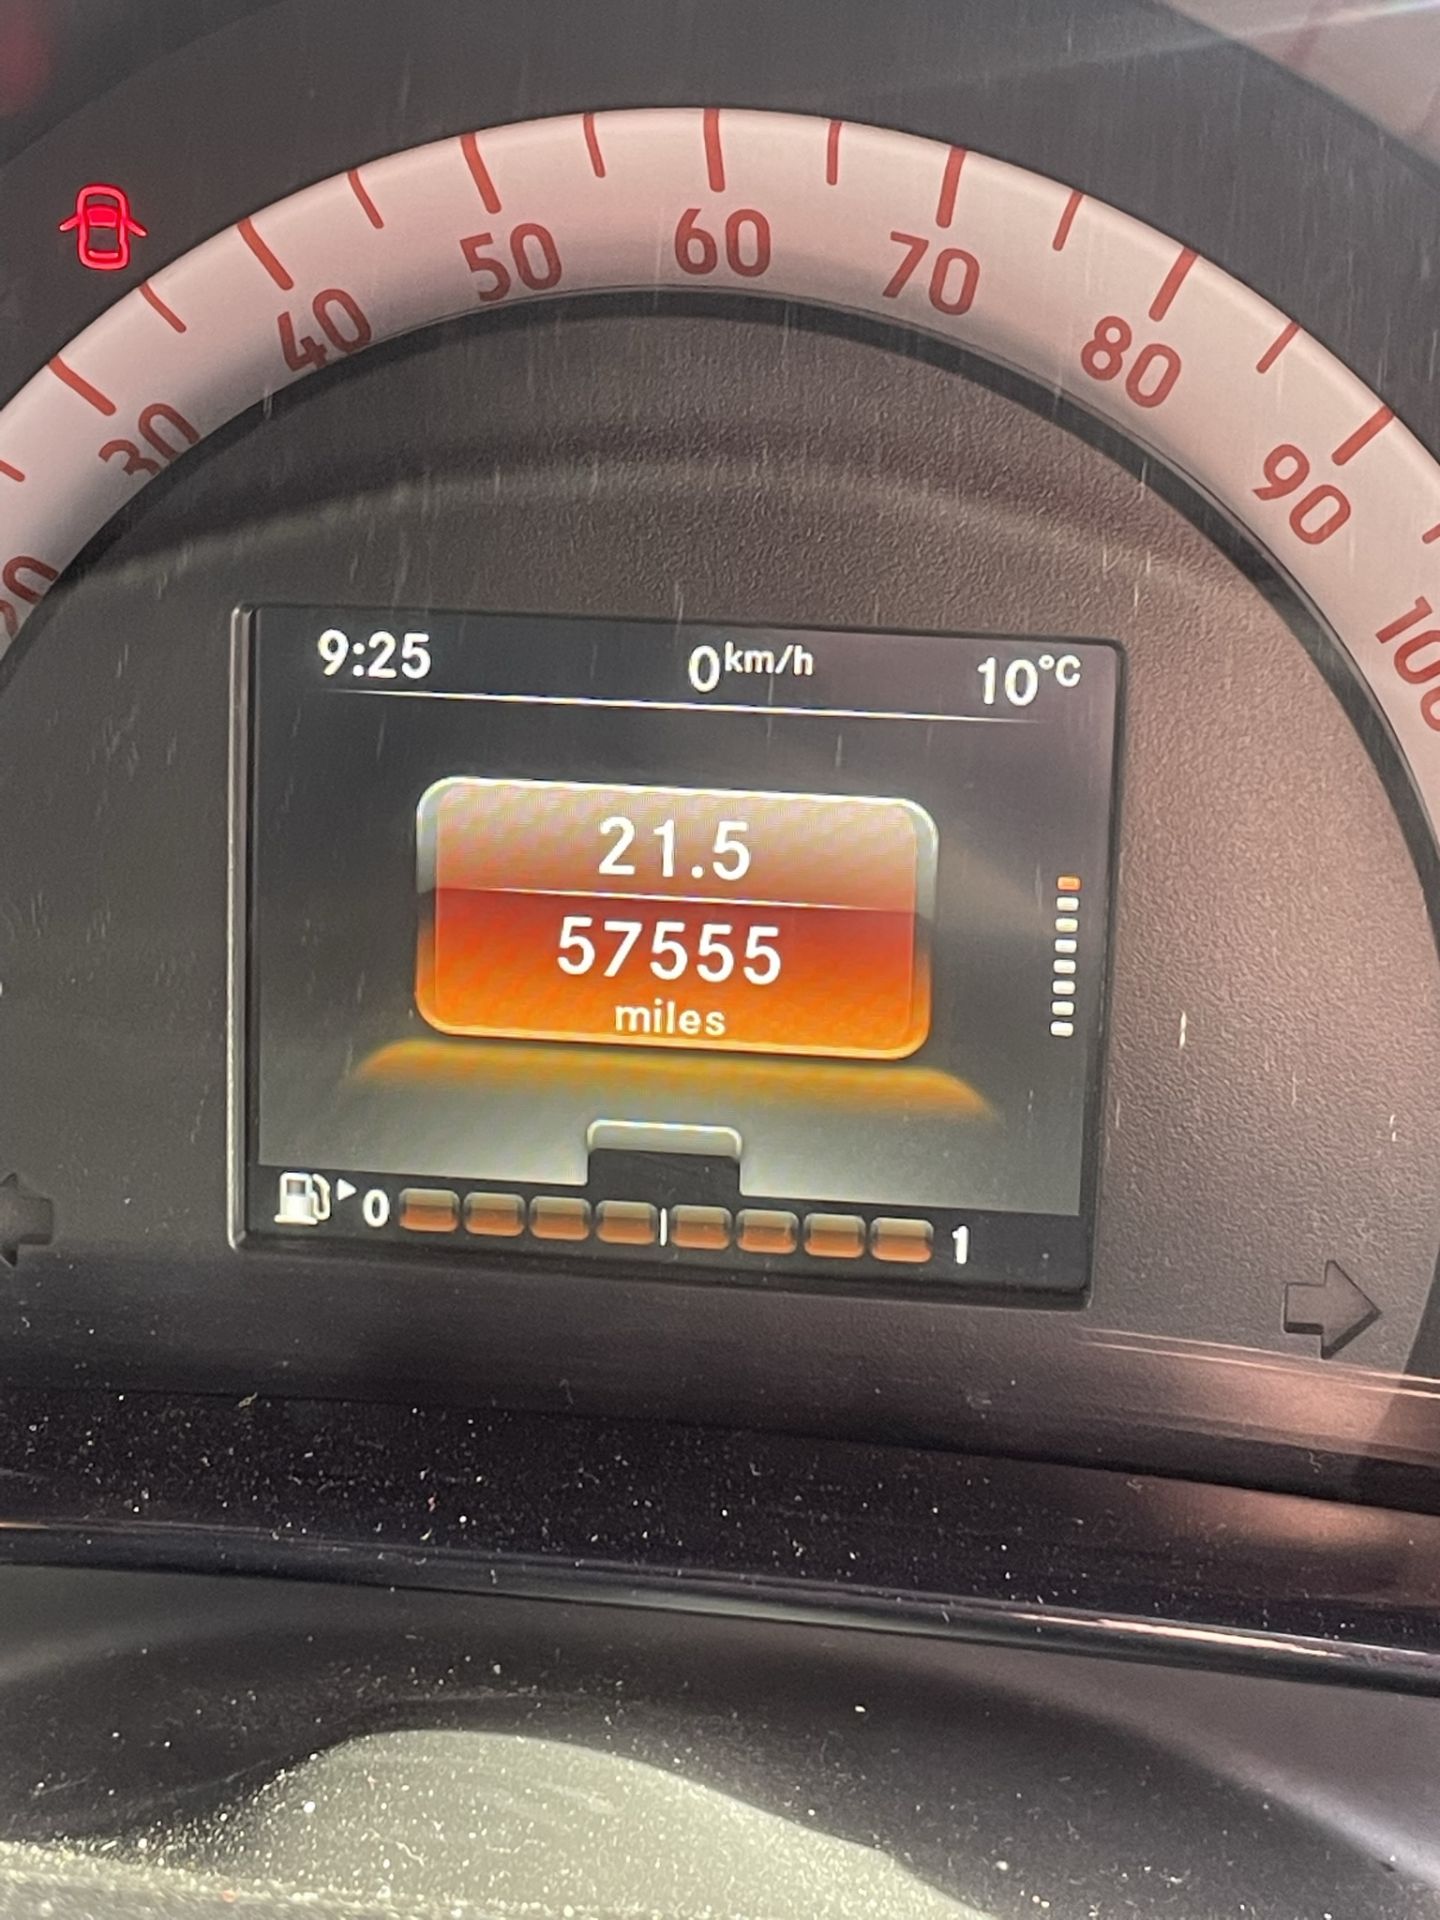 SMART ForTwo Prime Premium Auto Petrol Coupe | OV65 ZHT | 57,555 Miles - Image 10 of 10